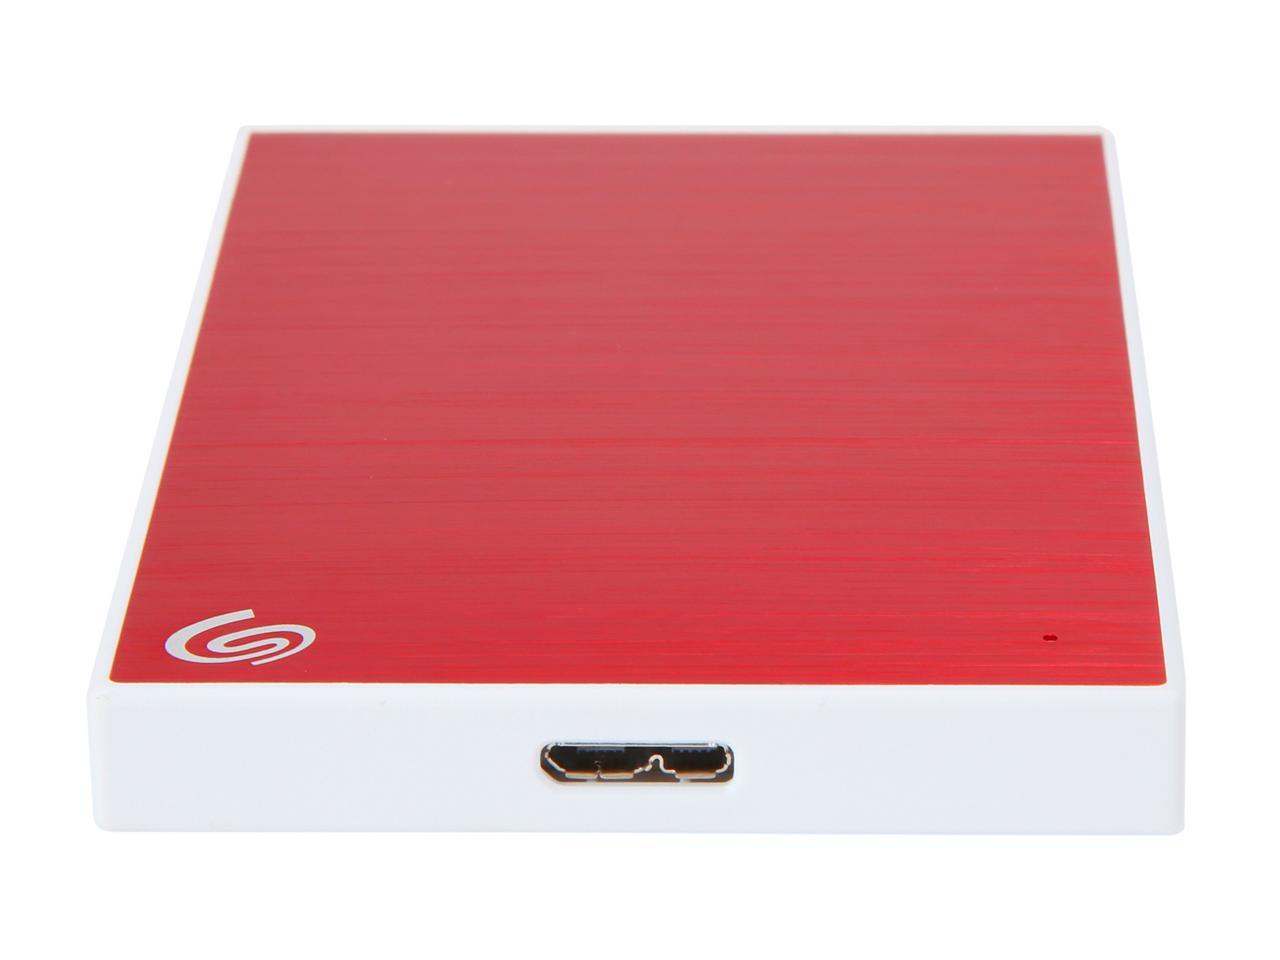 Seagate 1Tb Backup Plus Slim Portable External Hard Drive Usb 3.0 Sthn1000403 Red + 1Yr Mylio Create + 2Mo Adobe Cc Photography